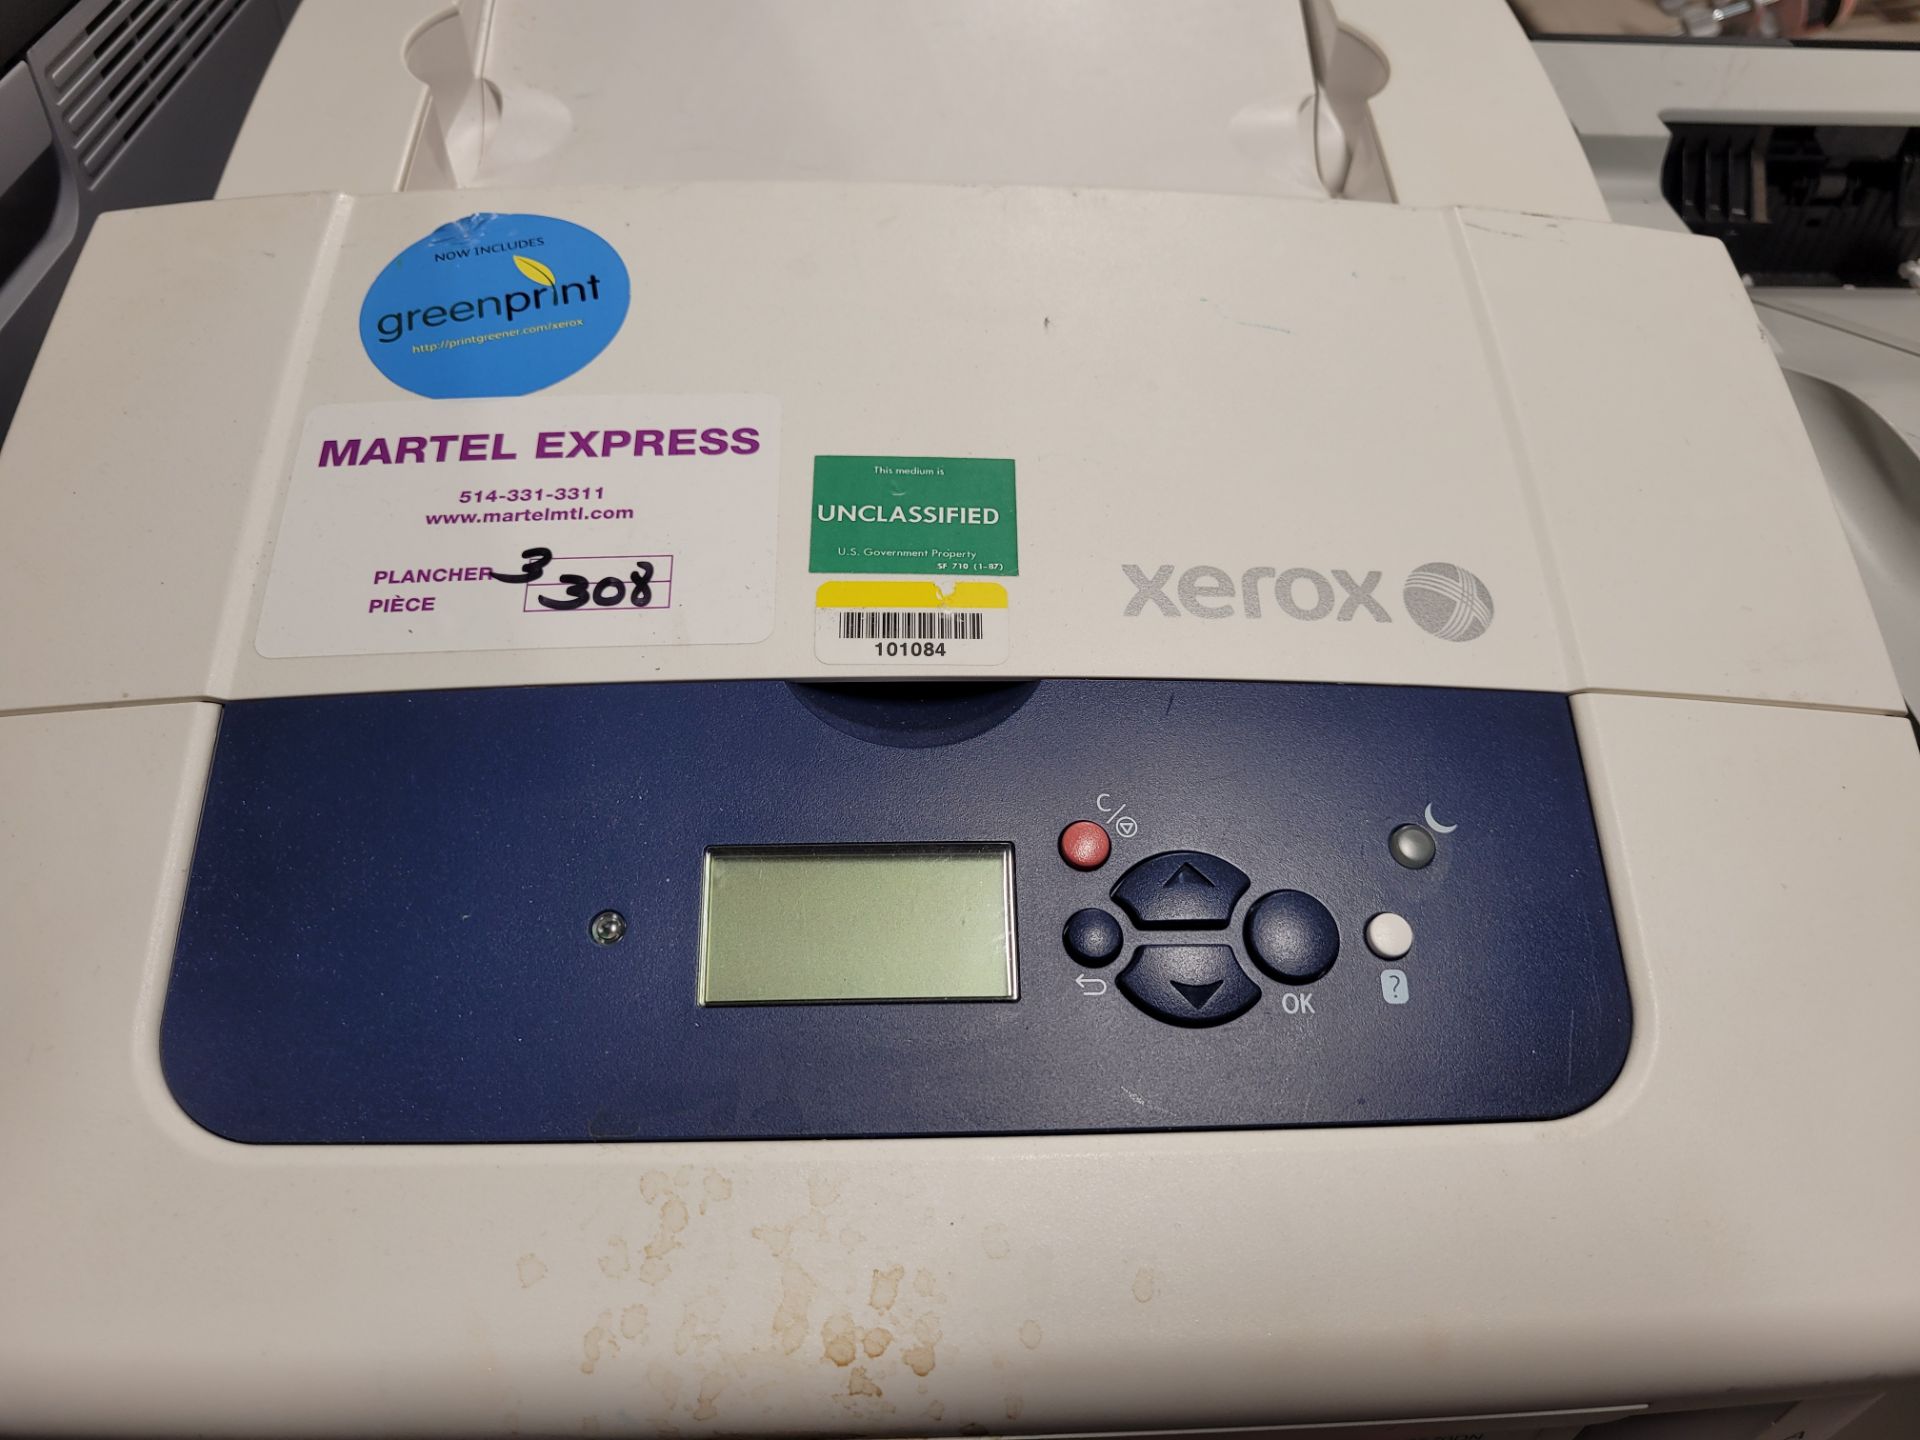 XEROX mod. 8570DN ColorQube color printer - Image 3 of 4